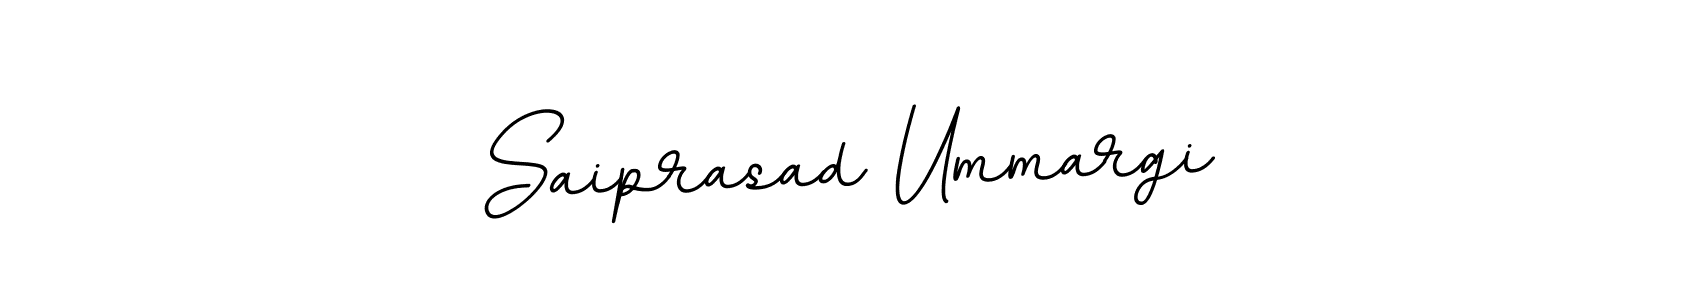 How to Draw Saiprasad Ummargi signature style? BallpointsItalic-DORy9 is a latest design signature styles for name Saiprasad Ummargi. Saiprasad Ummargi signature style 11 images and pictures png